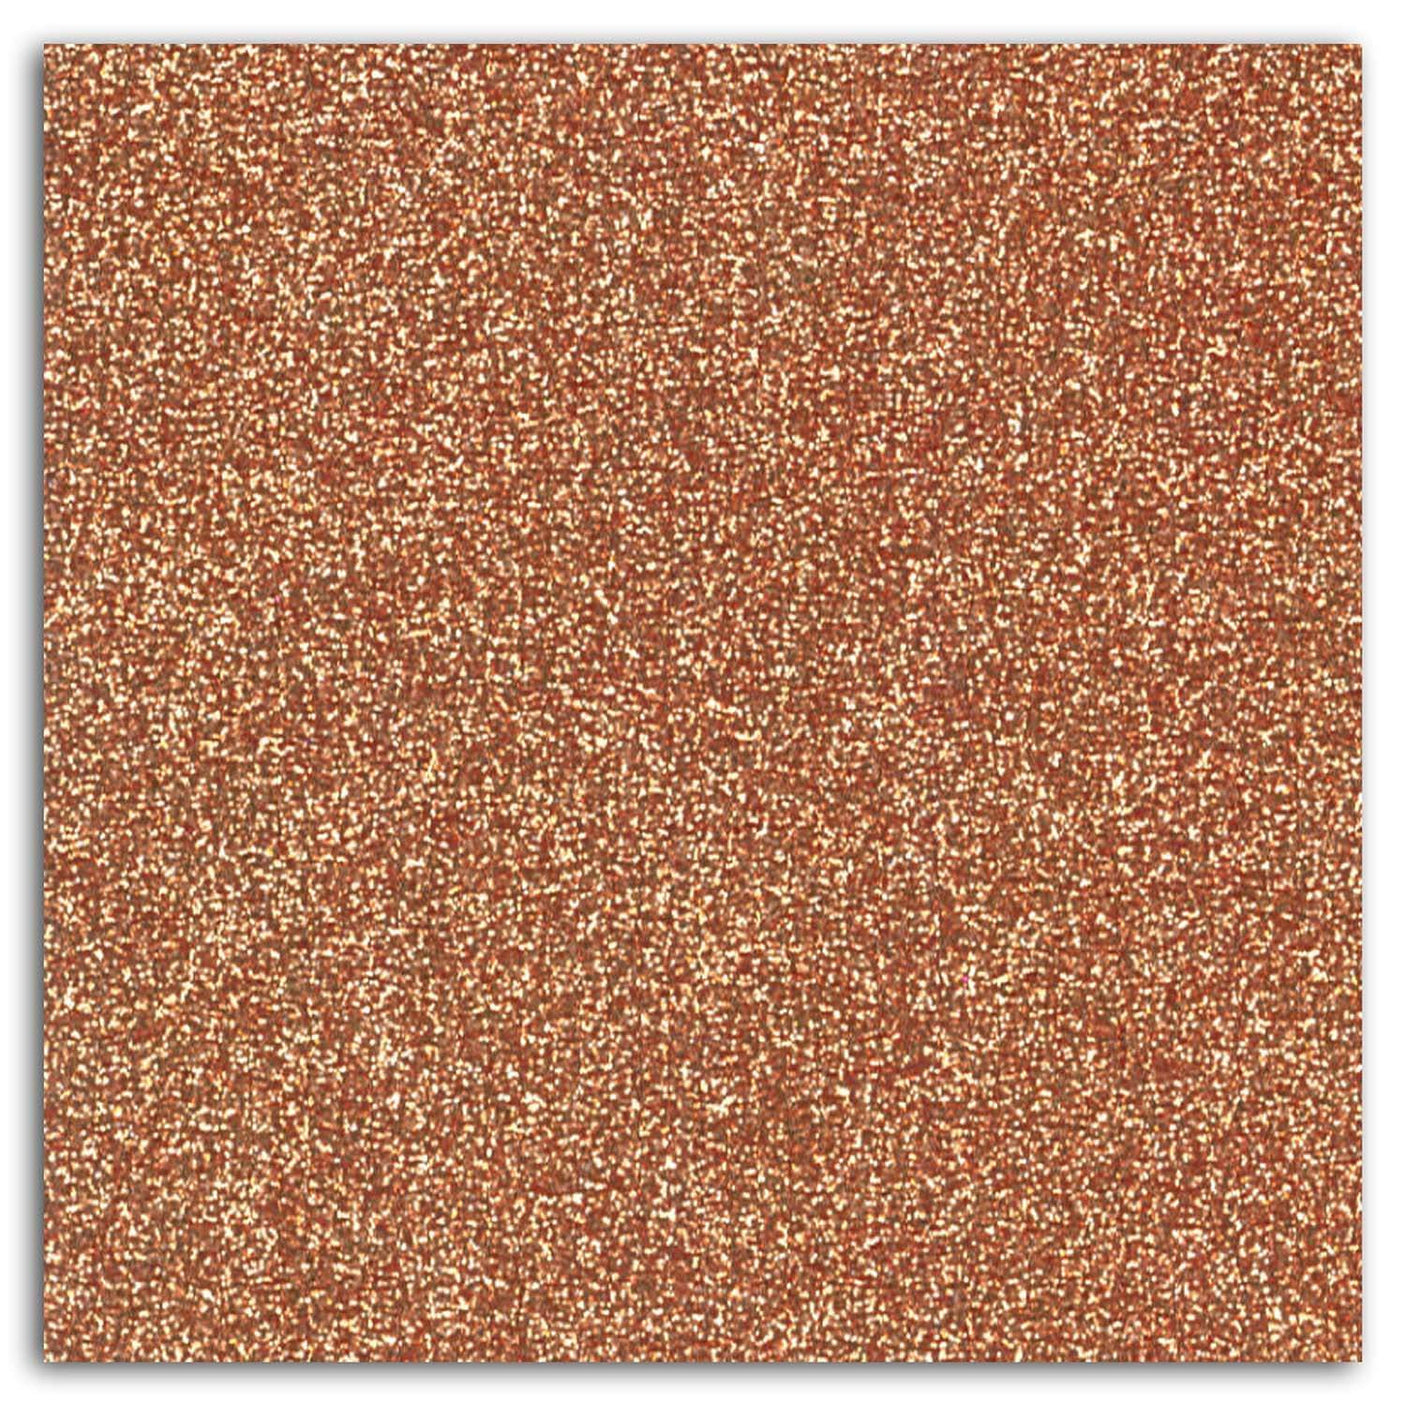 Copper glitter adhesive paper 30.5x30.5 cm